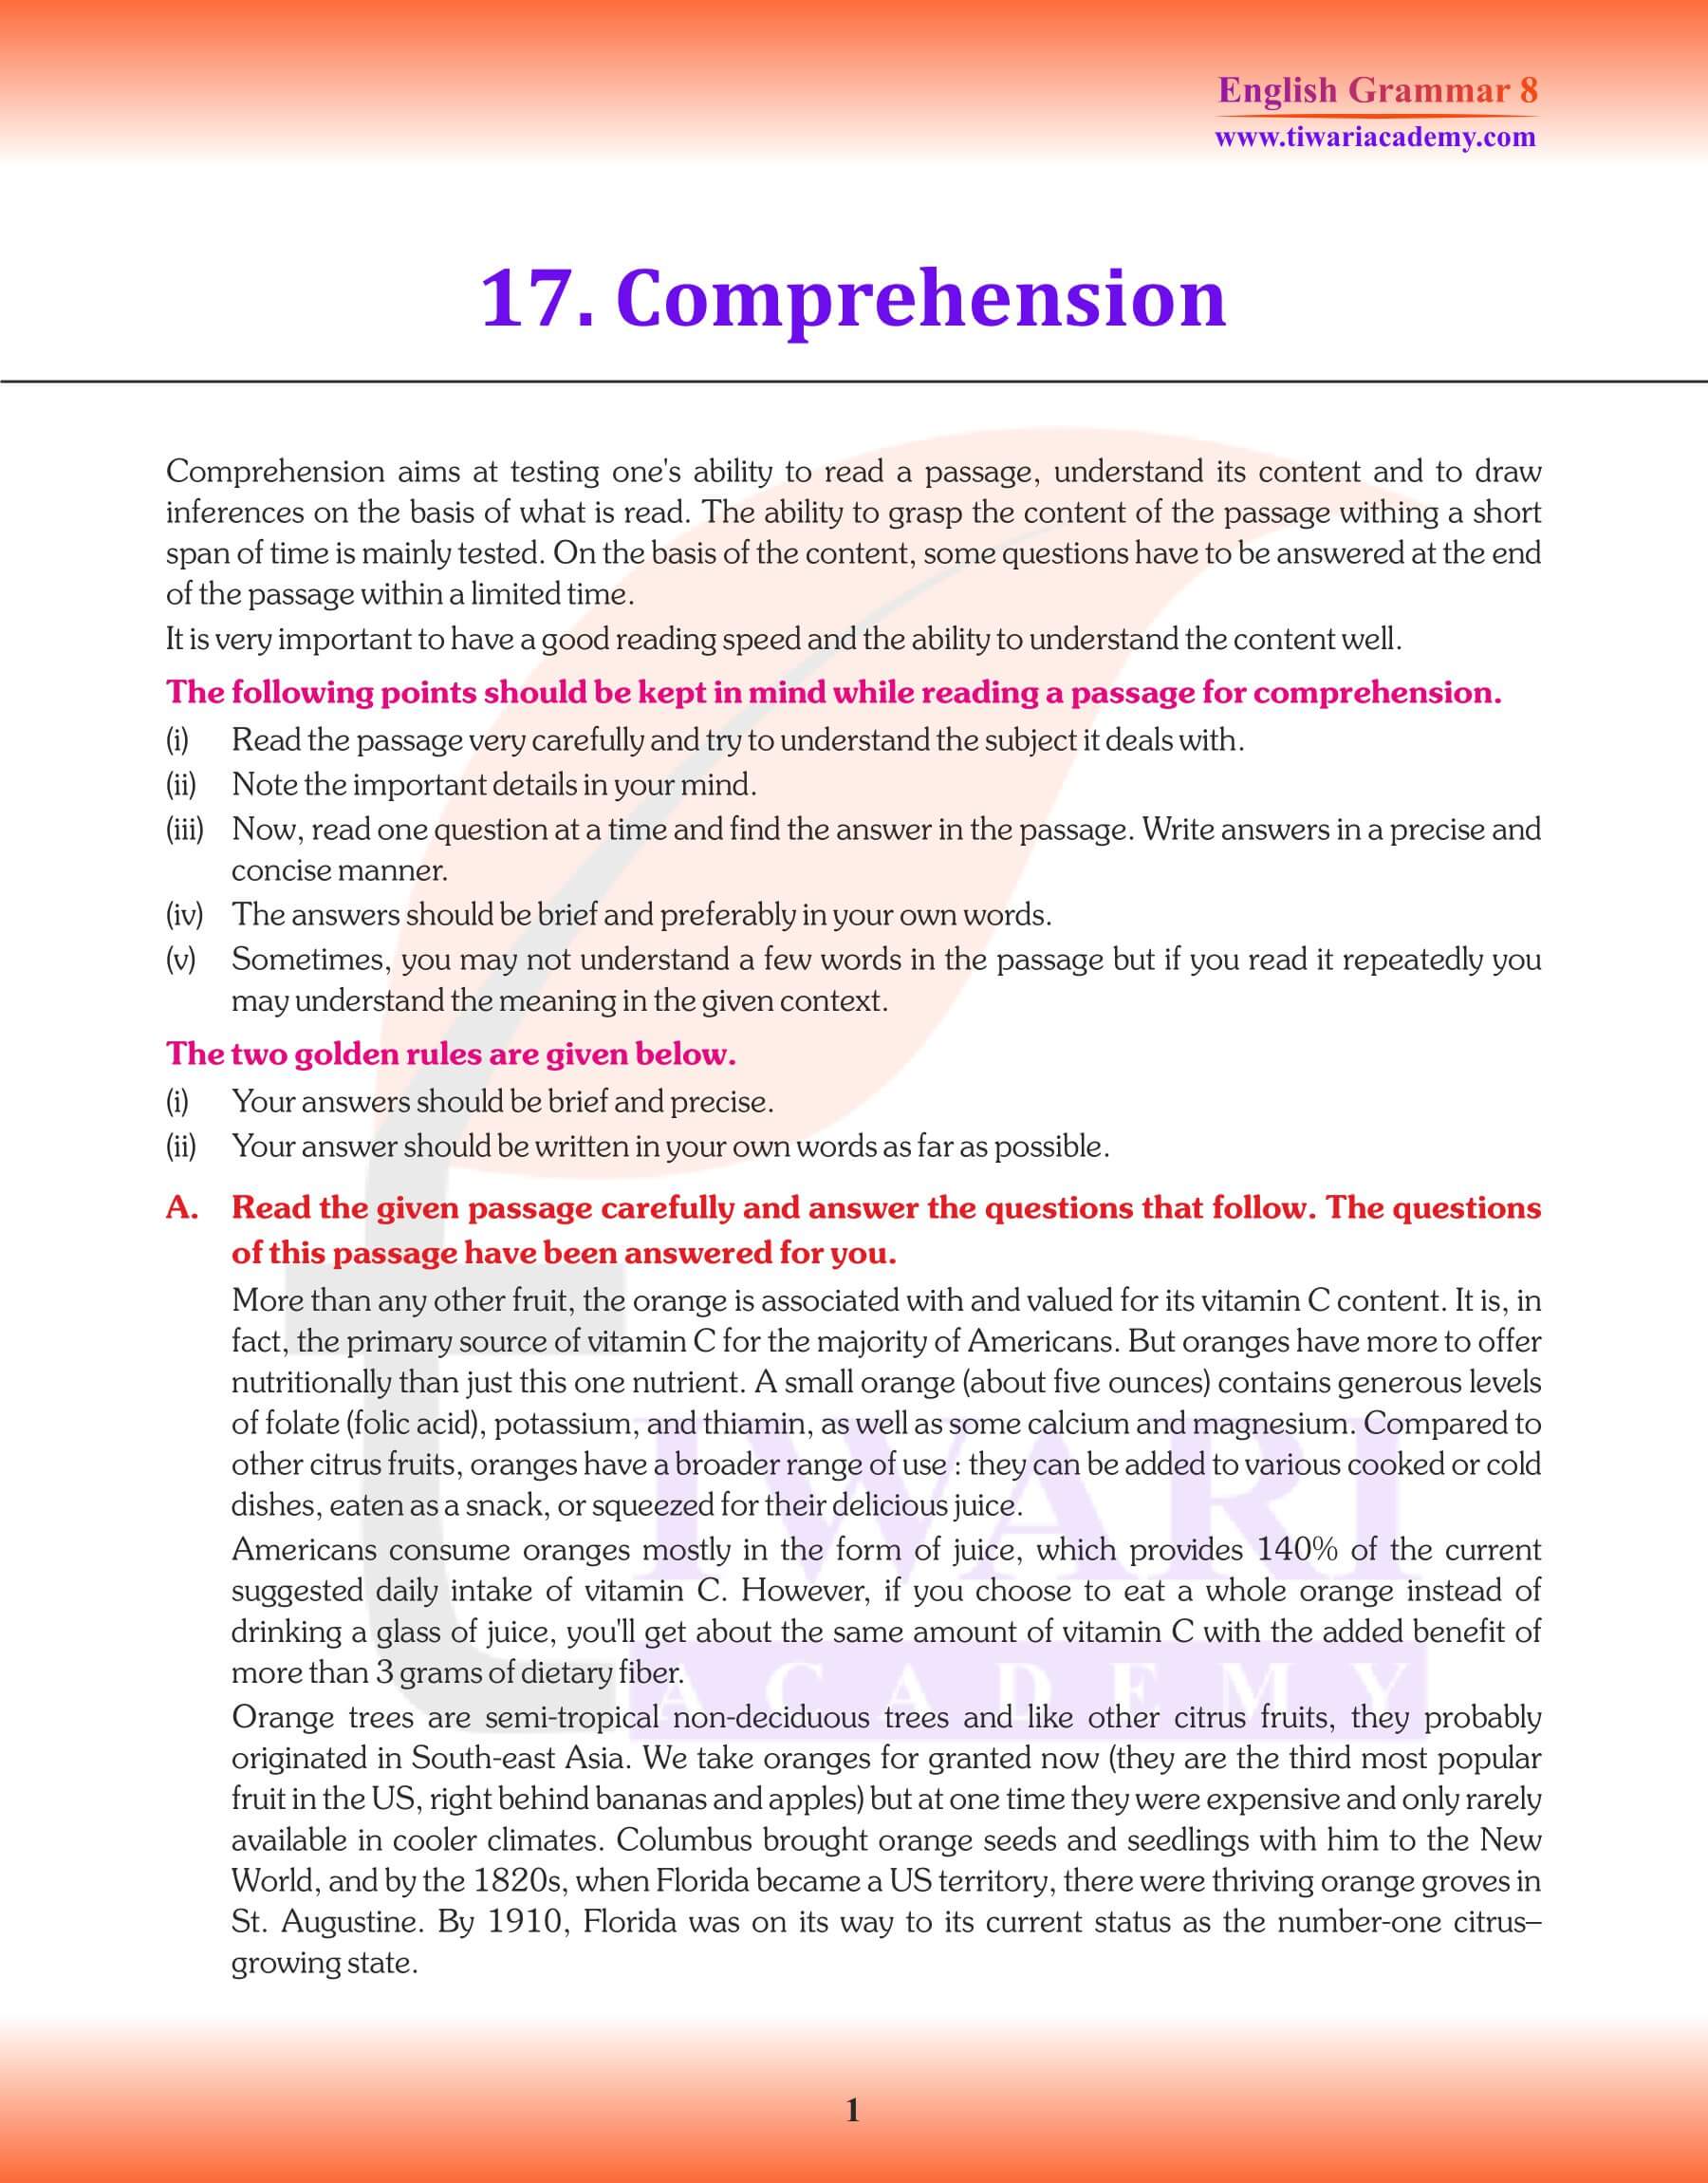 Class 8 English Grammar Comprehension Revision book